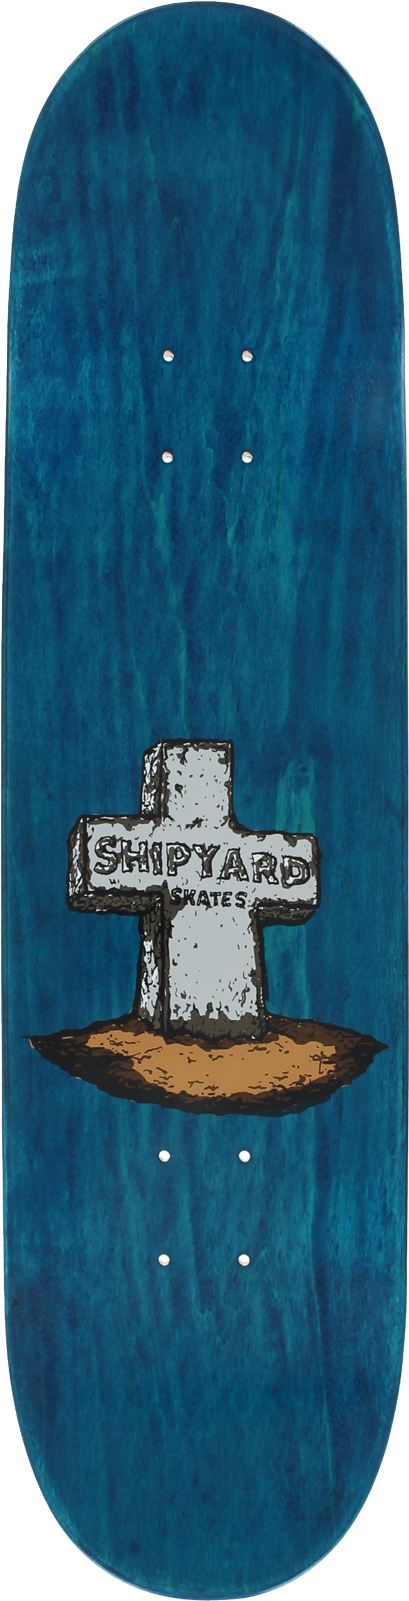 Shipyard Weeping Angel Skateboard Deck (1600x1600), Png Download